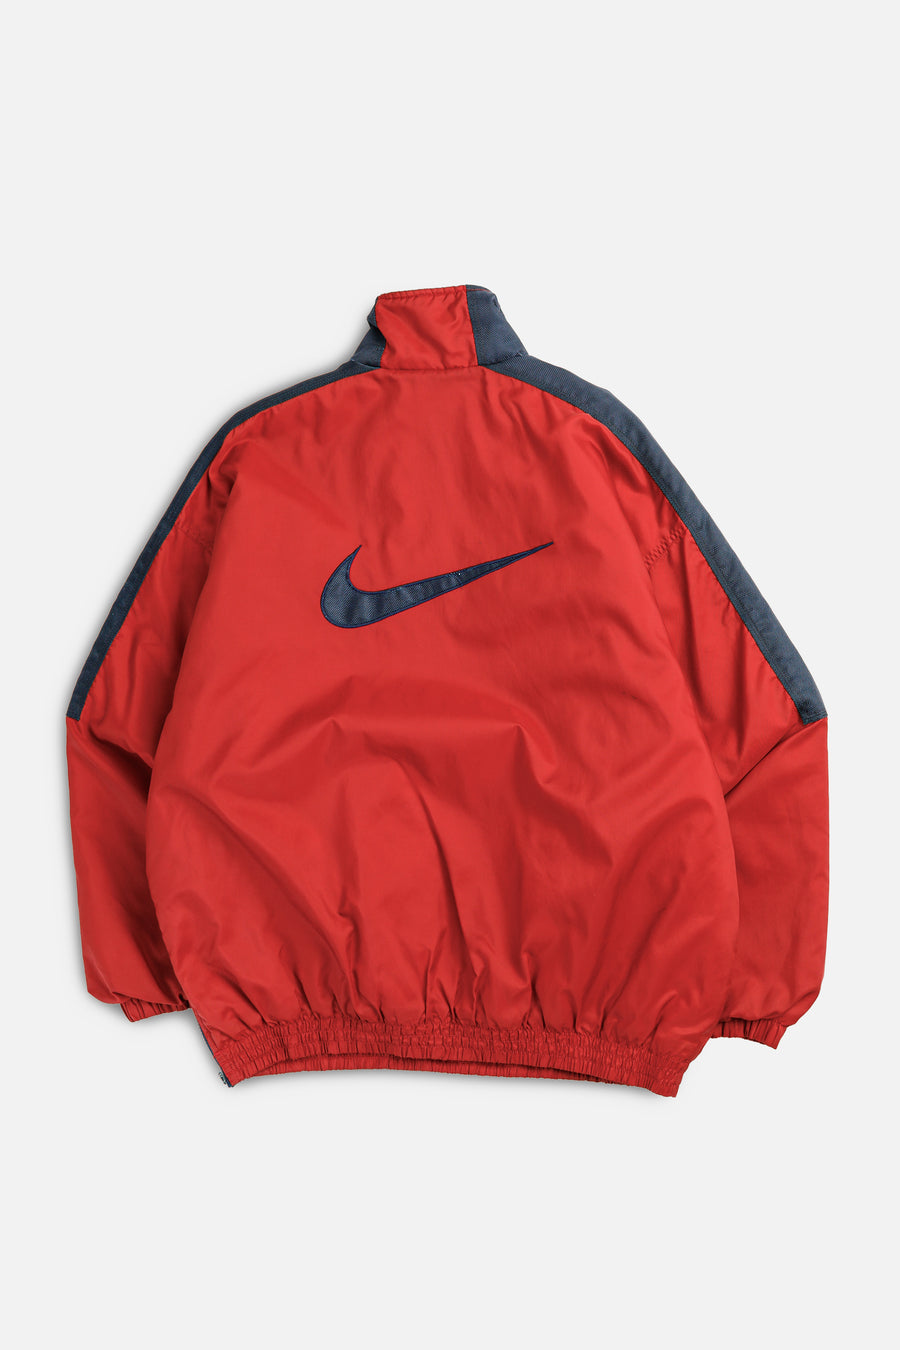 Vintage Nike Puffer Jacket - L